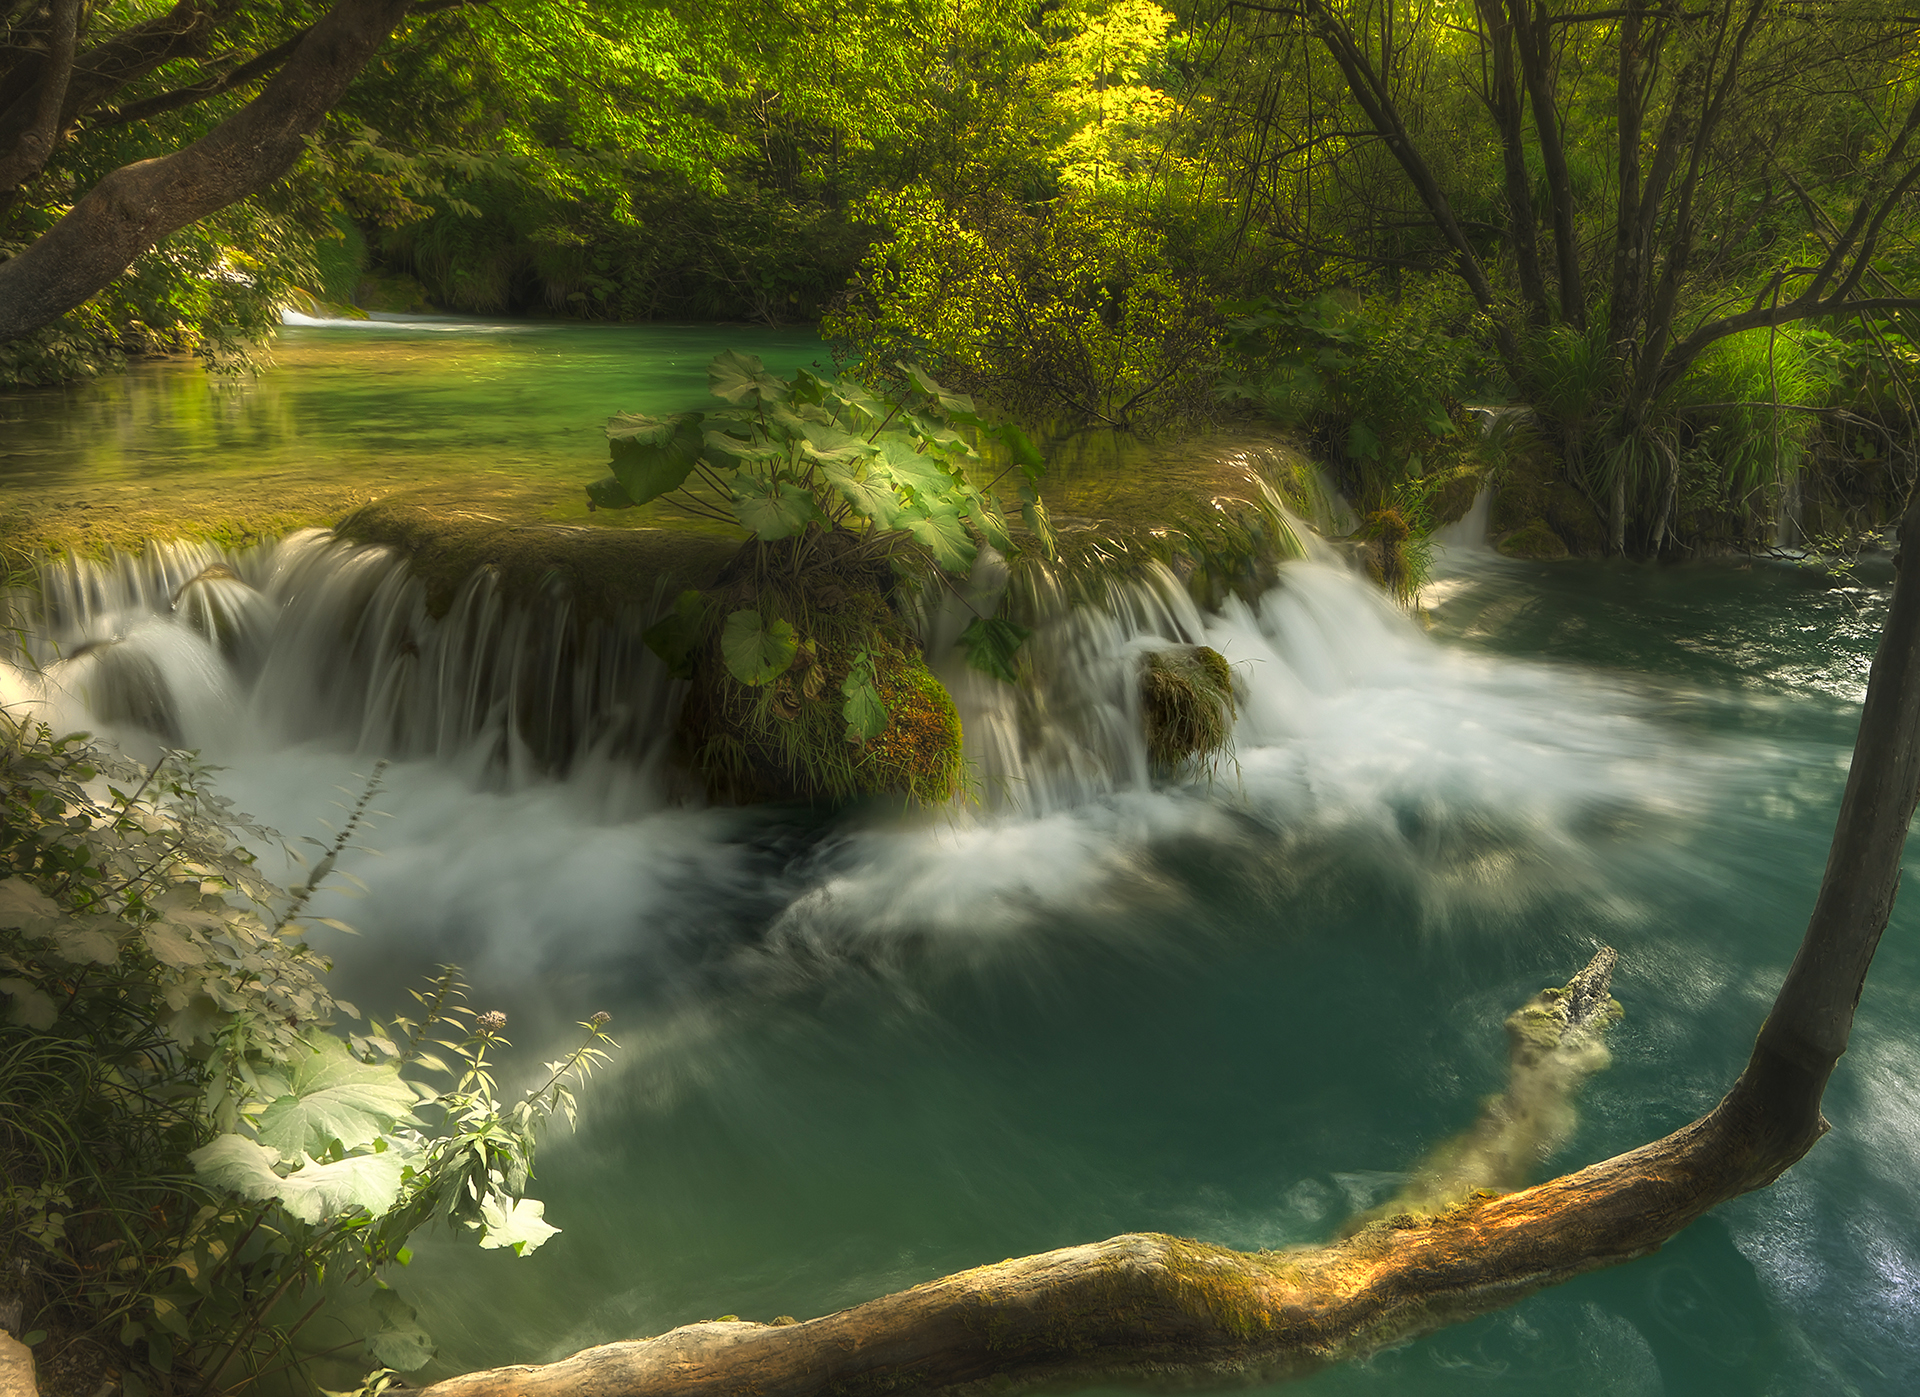 Waterfall at Plitvice Lakes National Park in Croatia